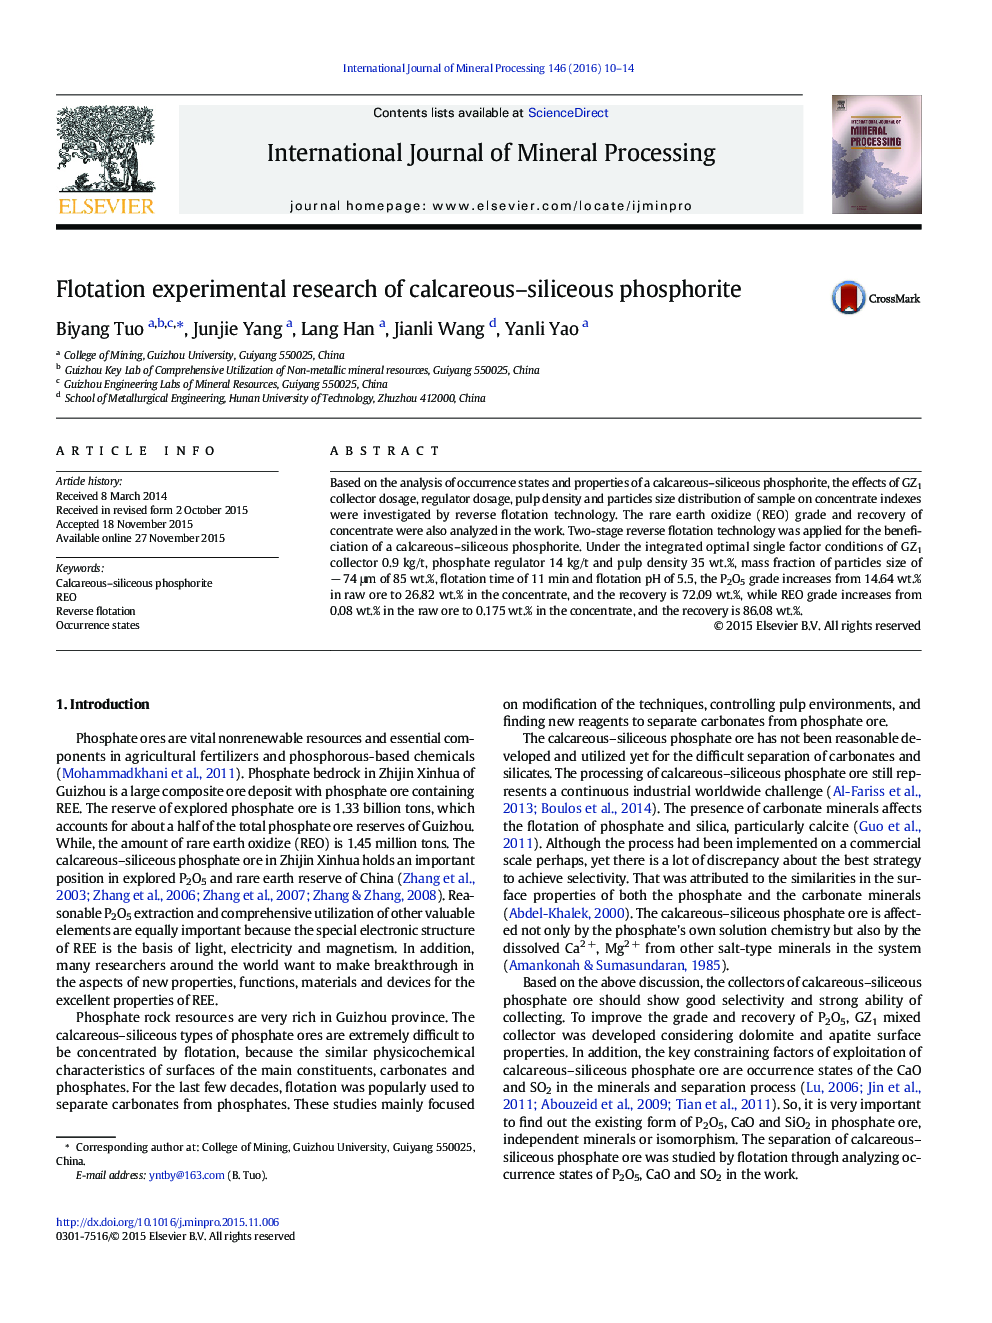 تحقیقات تجربی فلوراسیون فسفریت آهکی-سیلیکایی